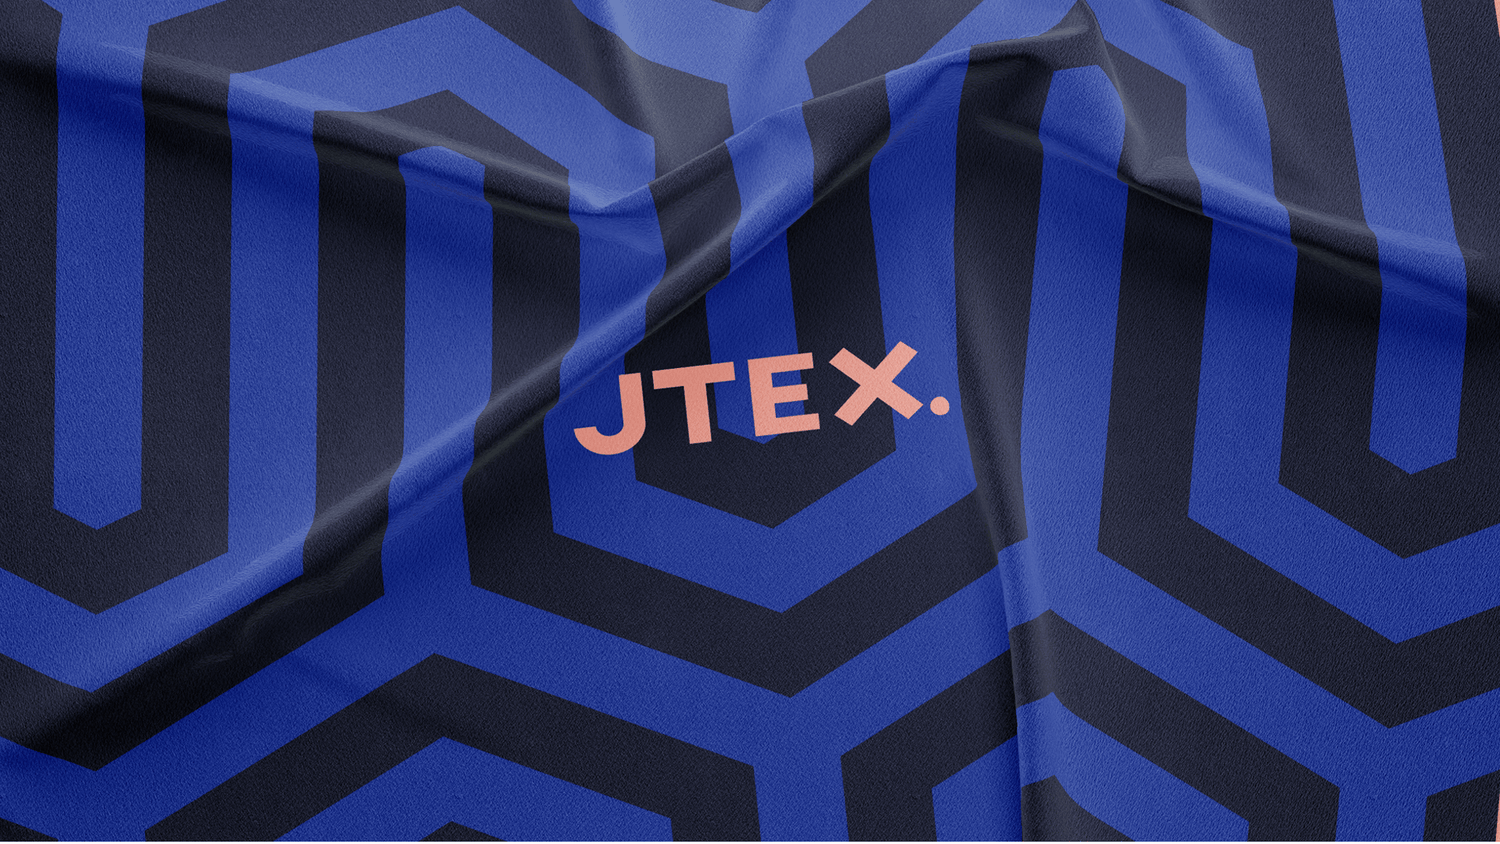 Jtex Impresiones Textiles